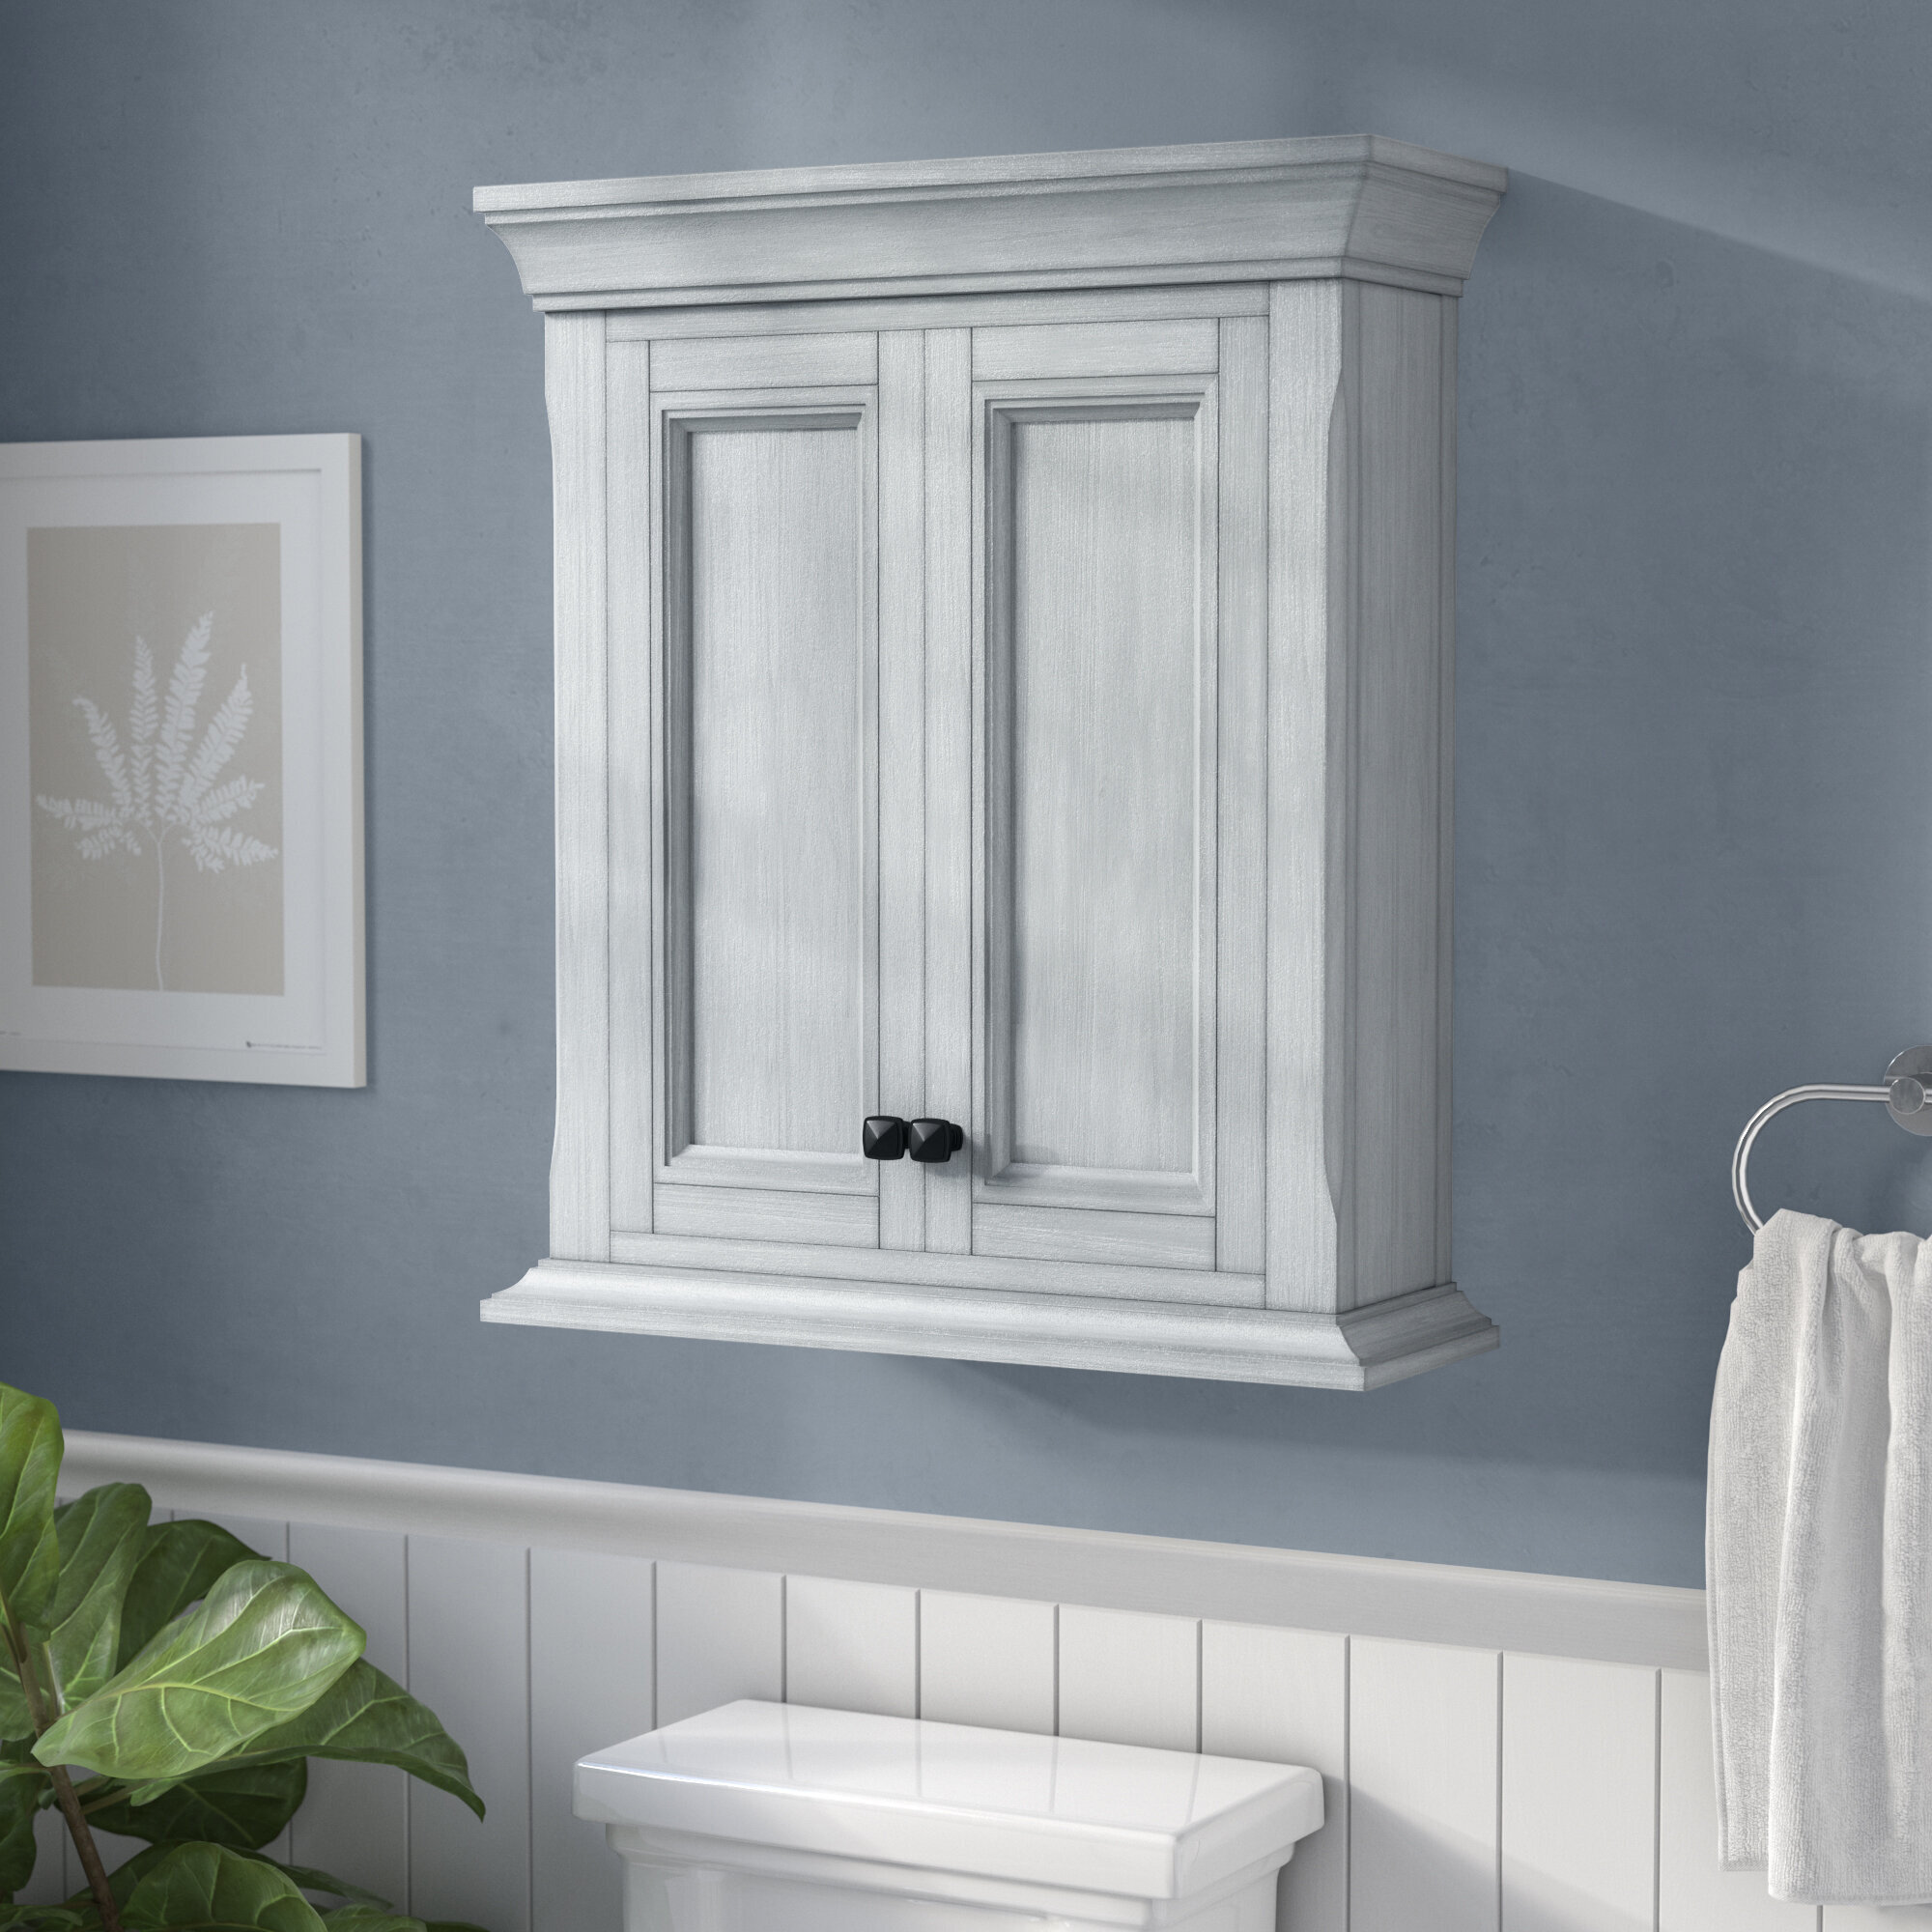 Red Barrel Studio® Horrel Wall Mount Toilet Paper Holder & Reviews